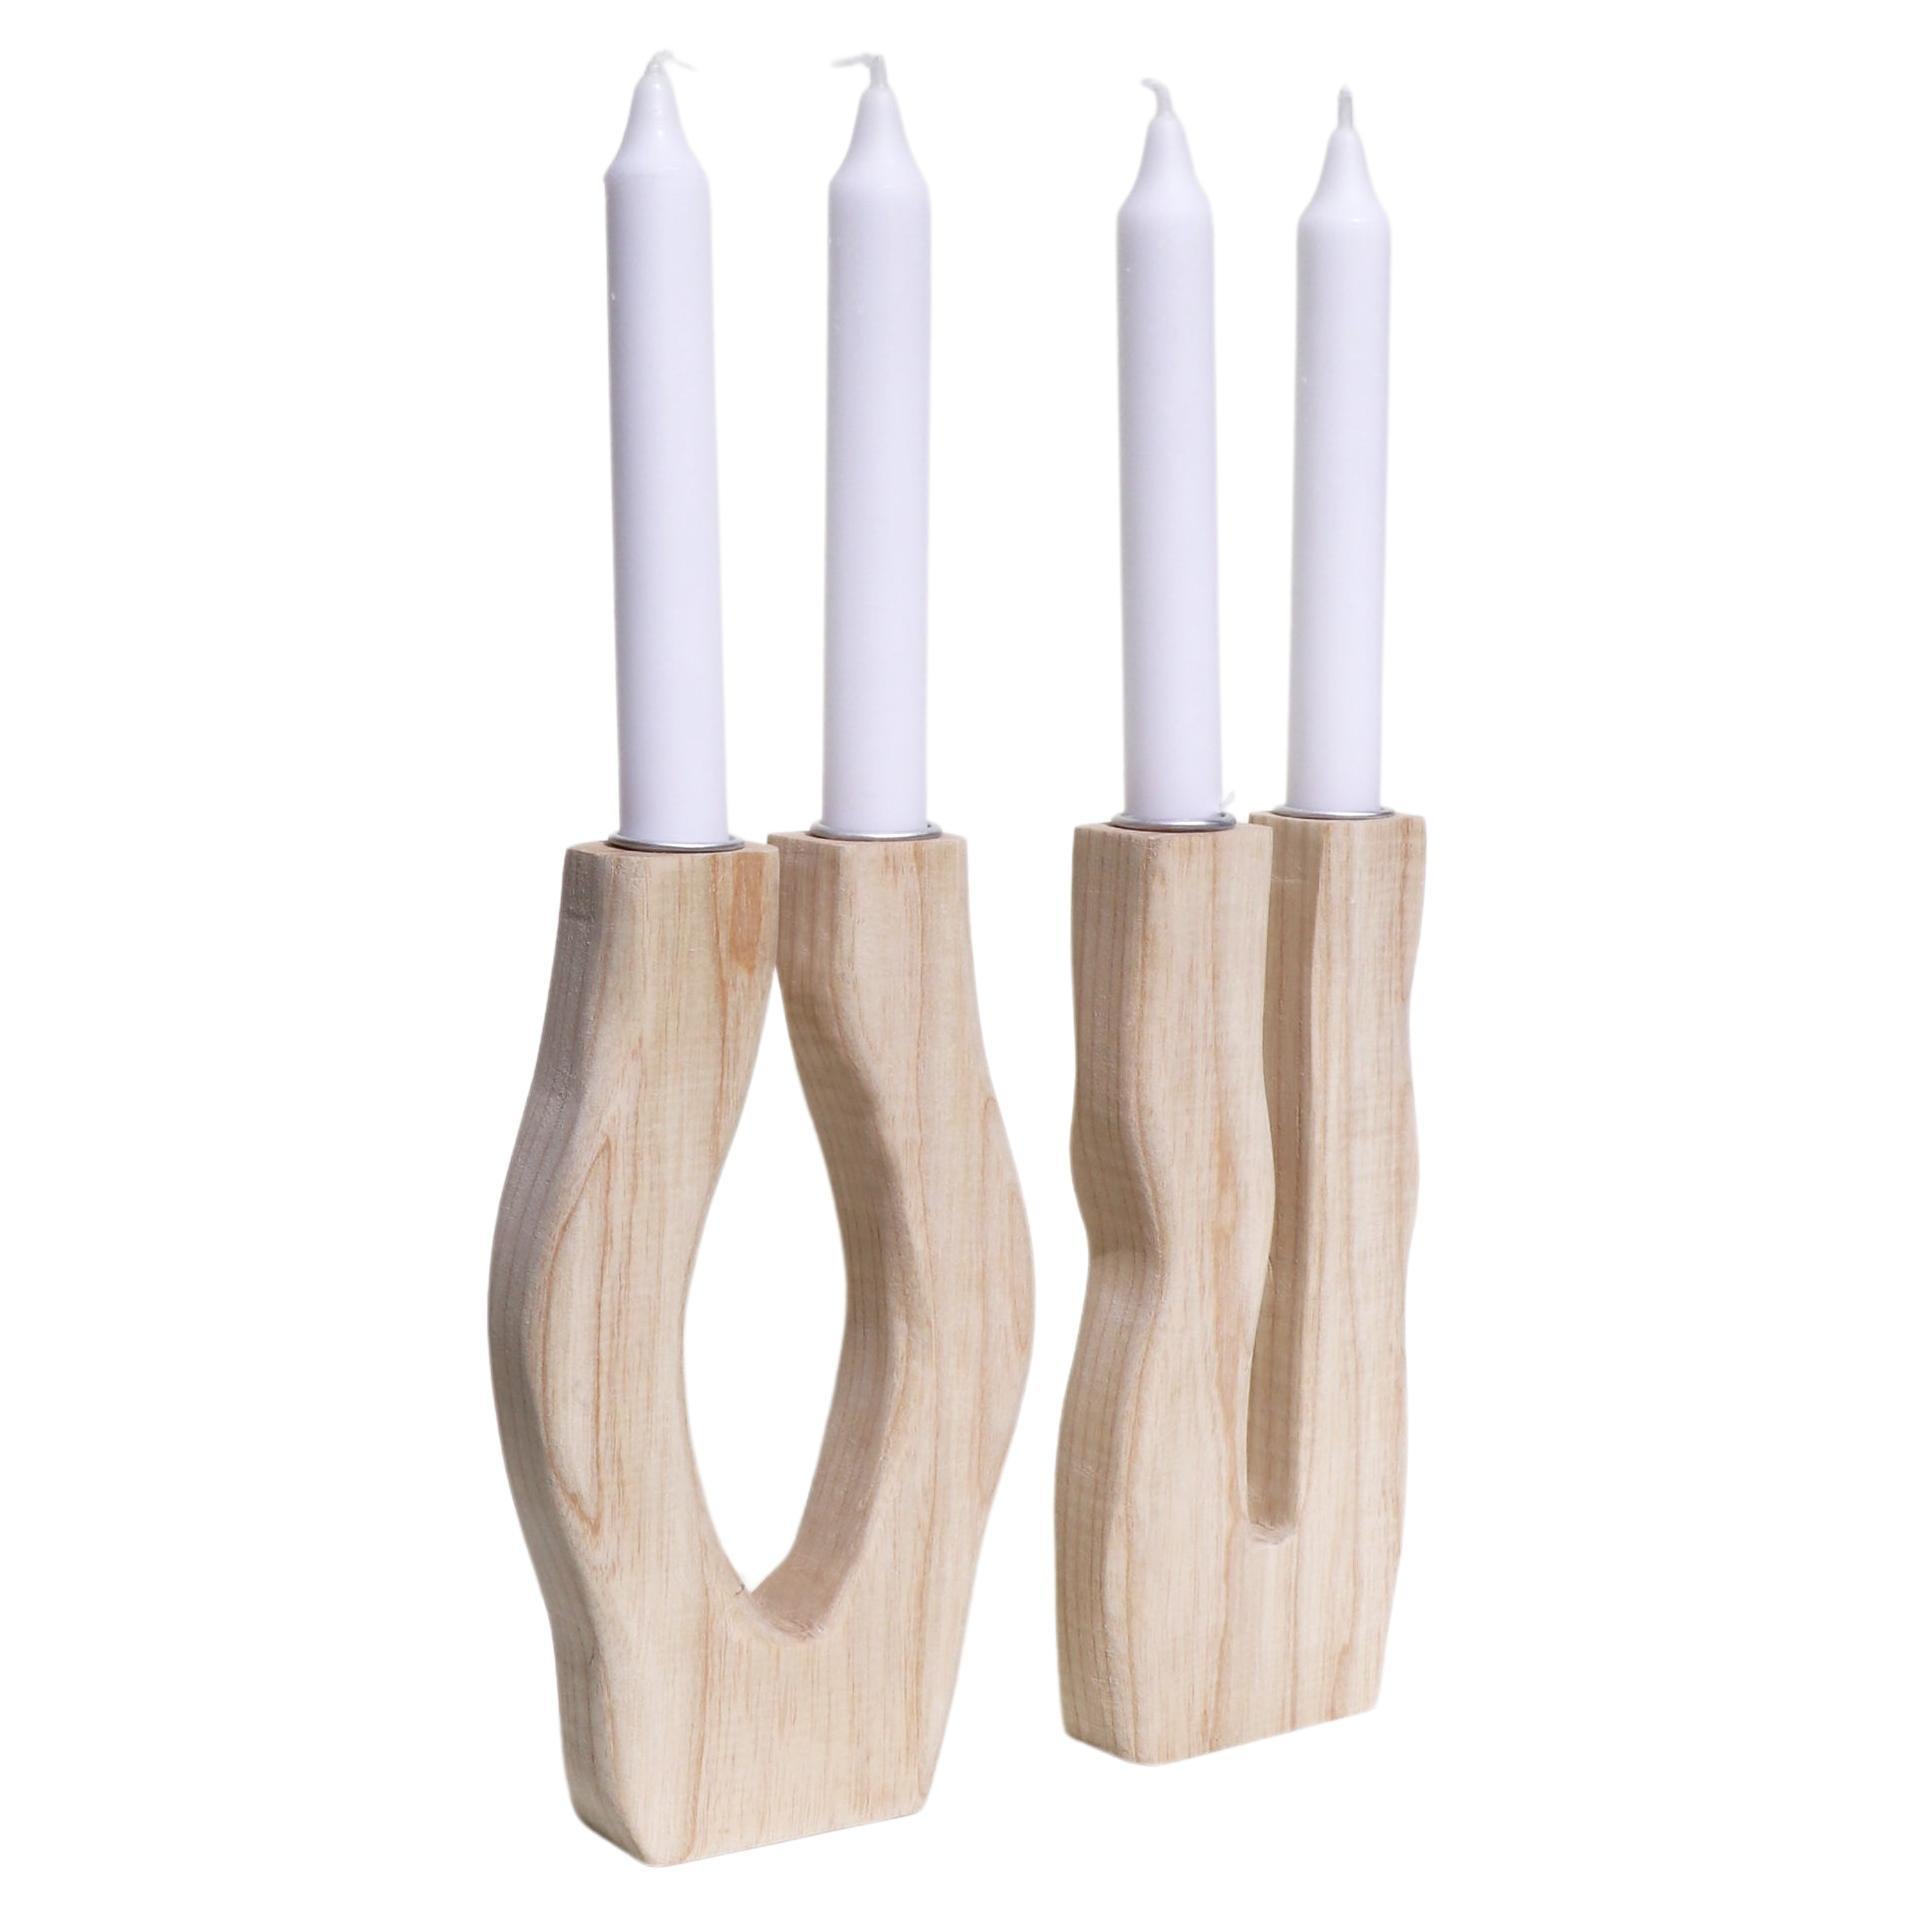 Set of 2 Swing & Arche Silhouette Candlesticks by Alice Lahana Studio